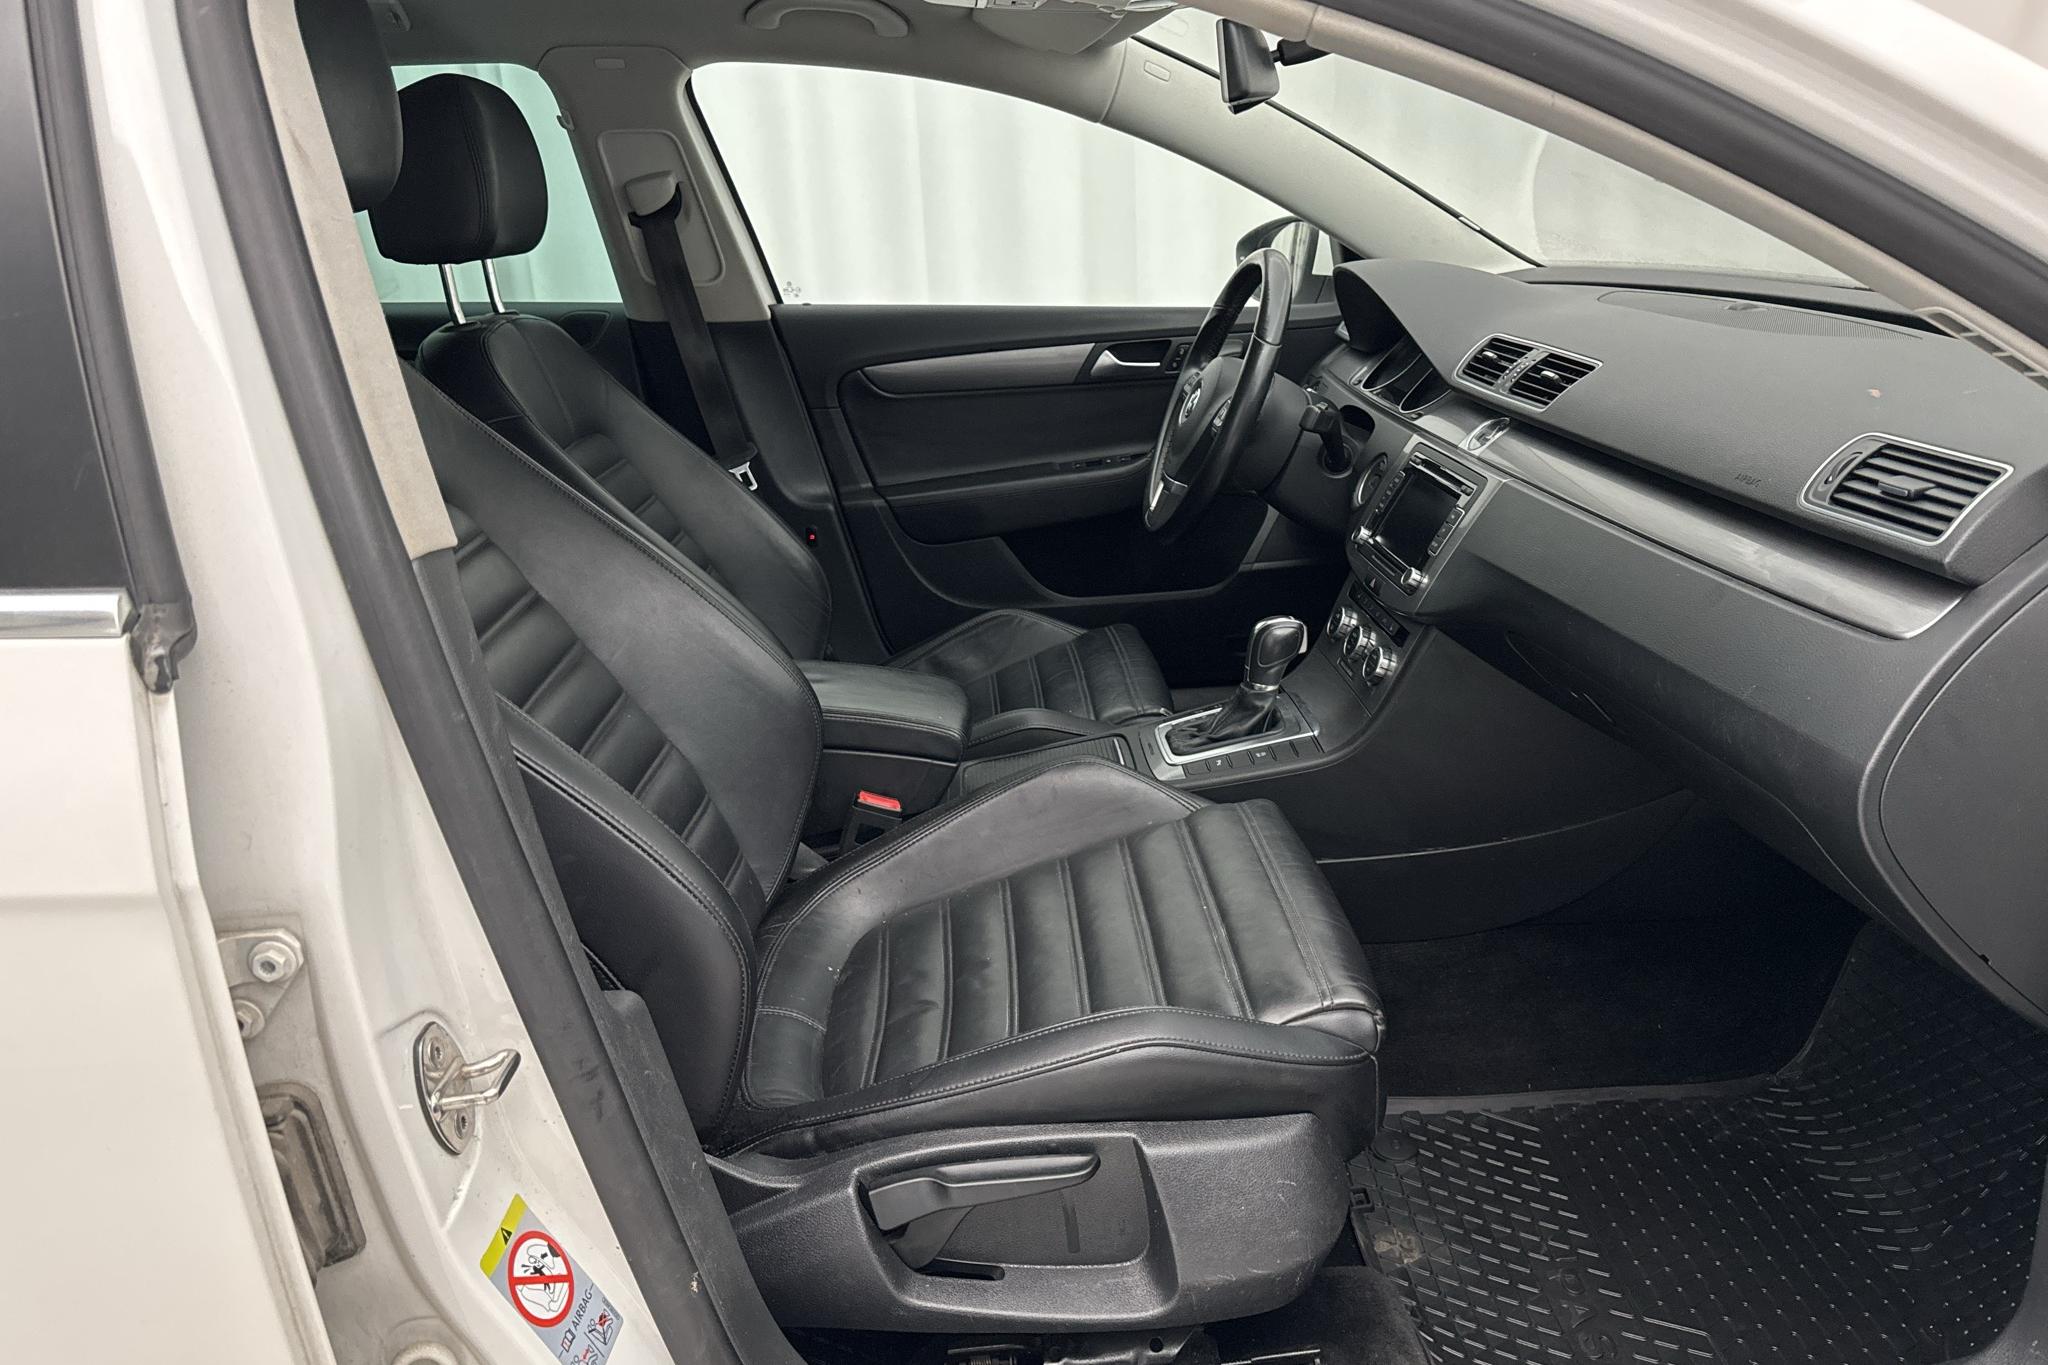 VW Passat 2.0 TDI BlueMotion Technology Variant 4Motion (177hk) - 132 290 km - Automaatne - valge - 2014